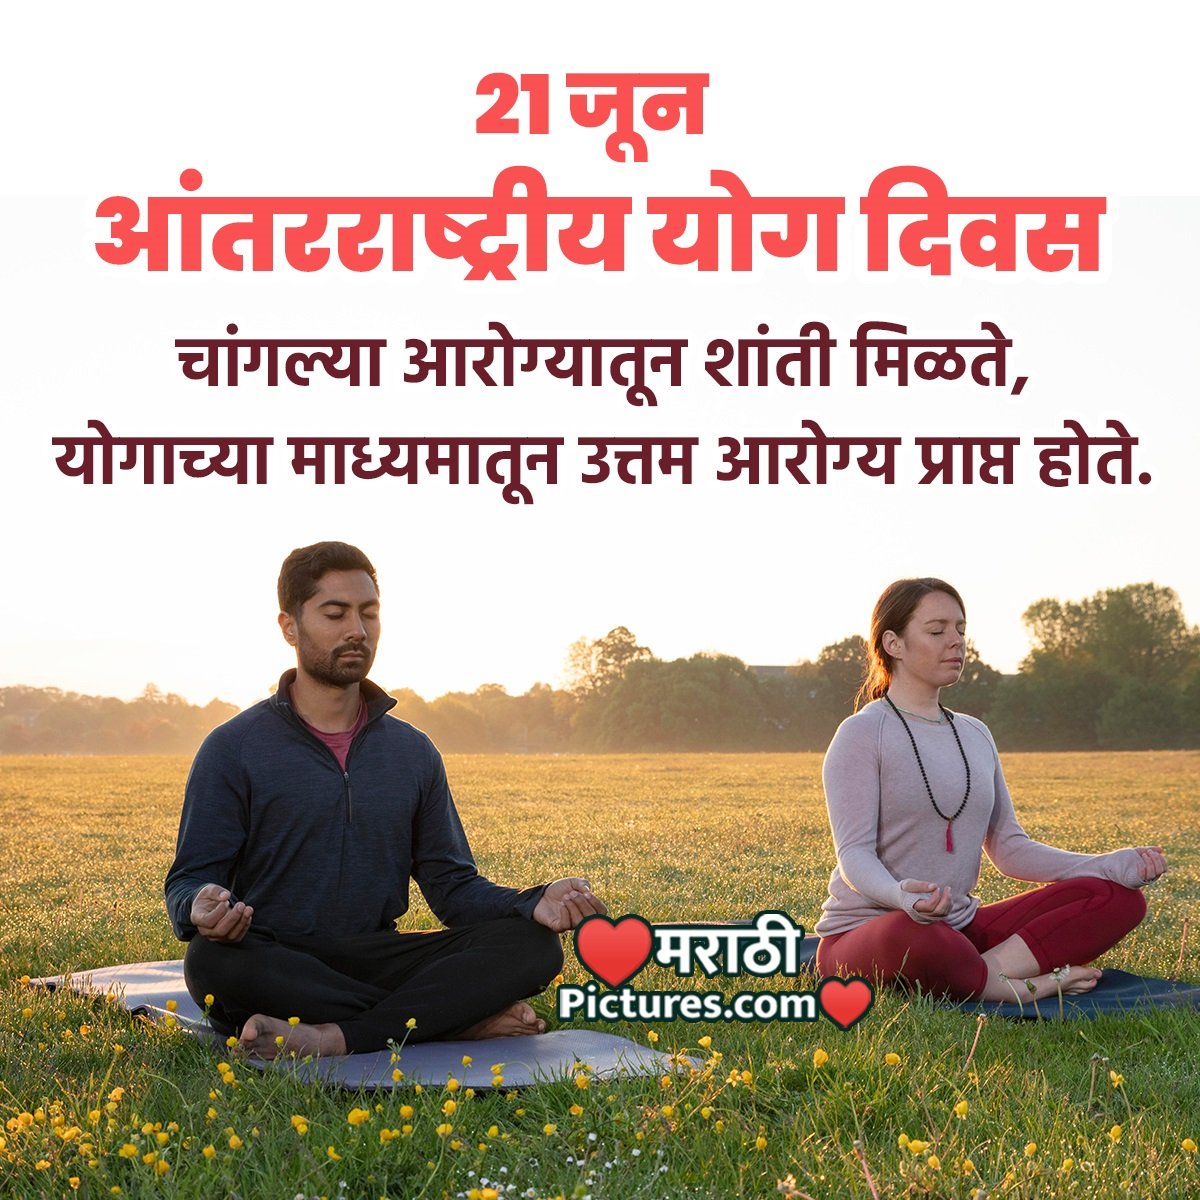 21 June International Yoga Day Quote